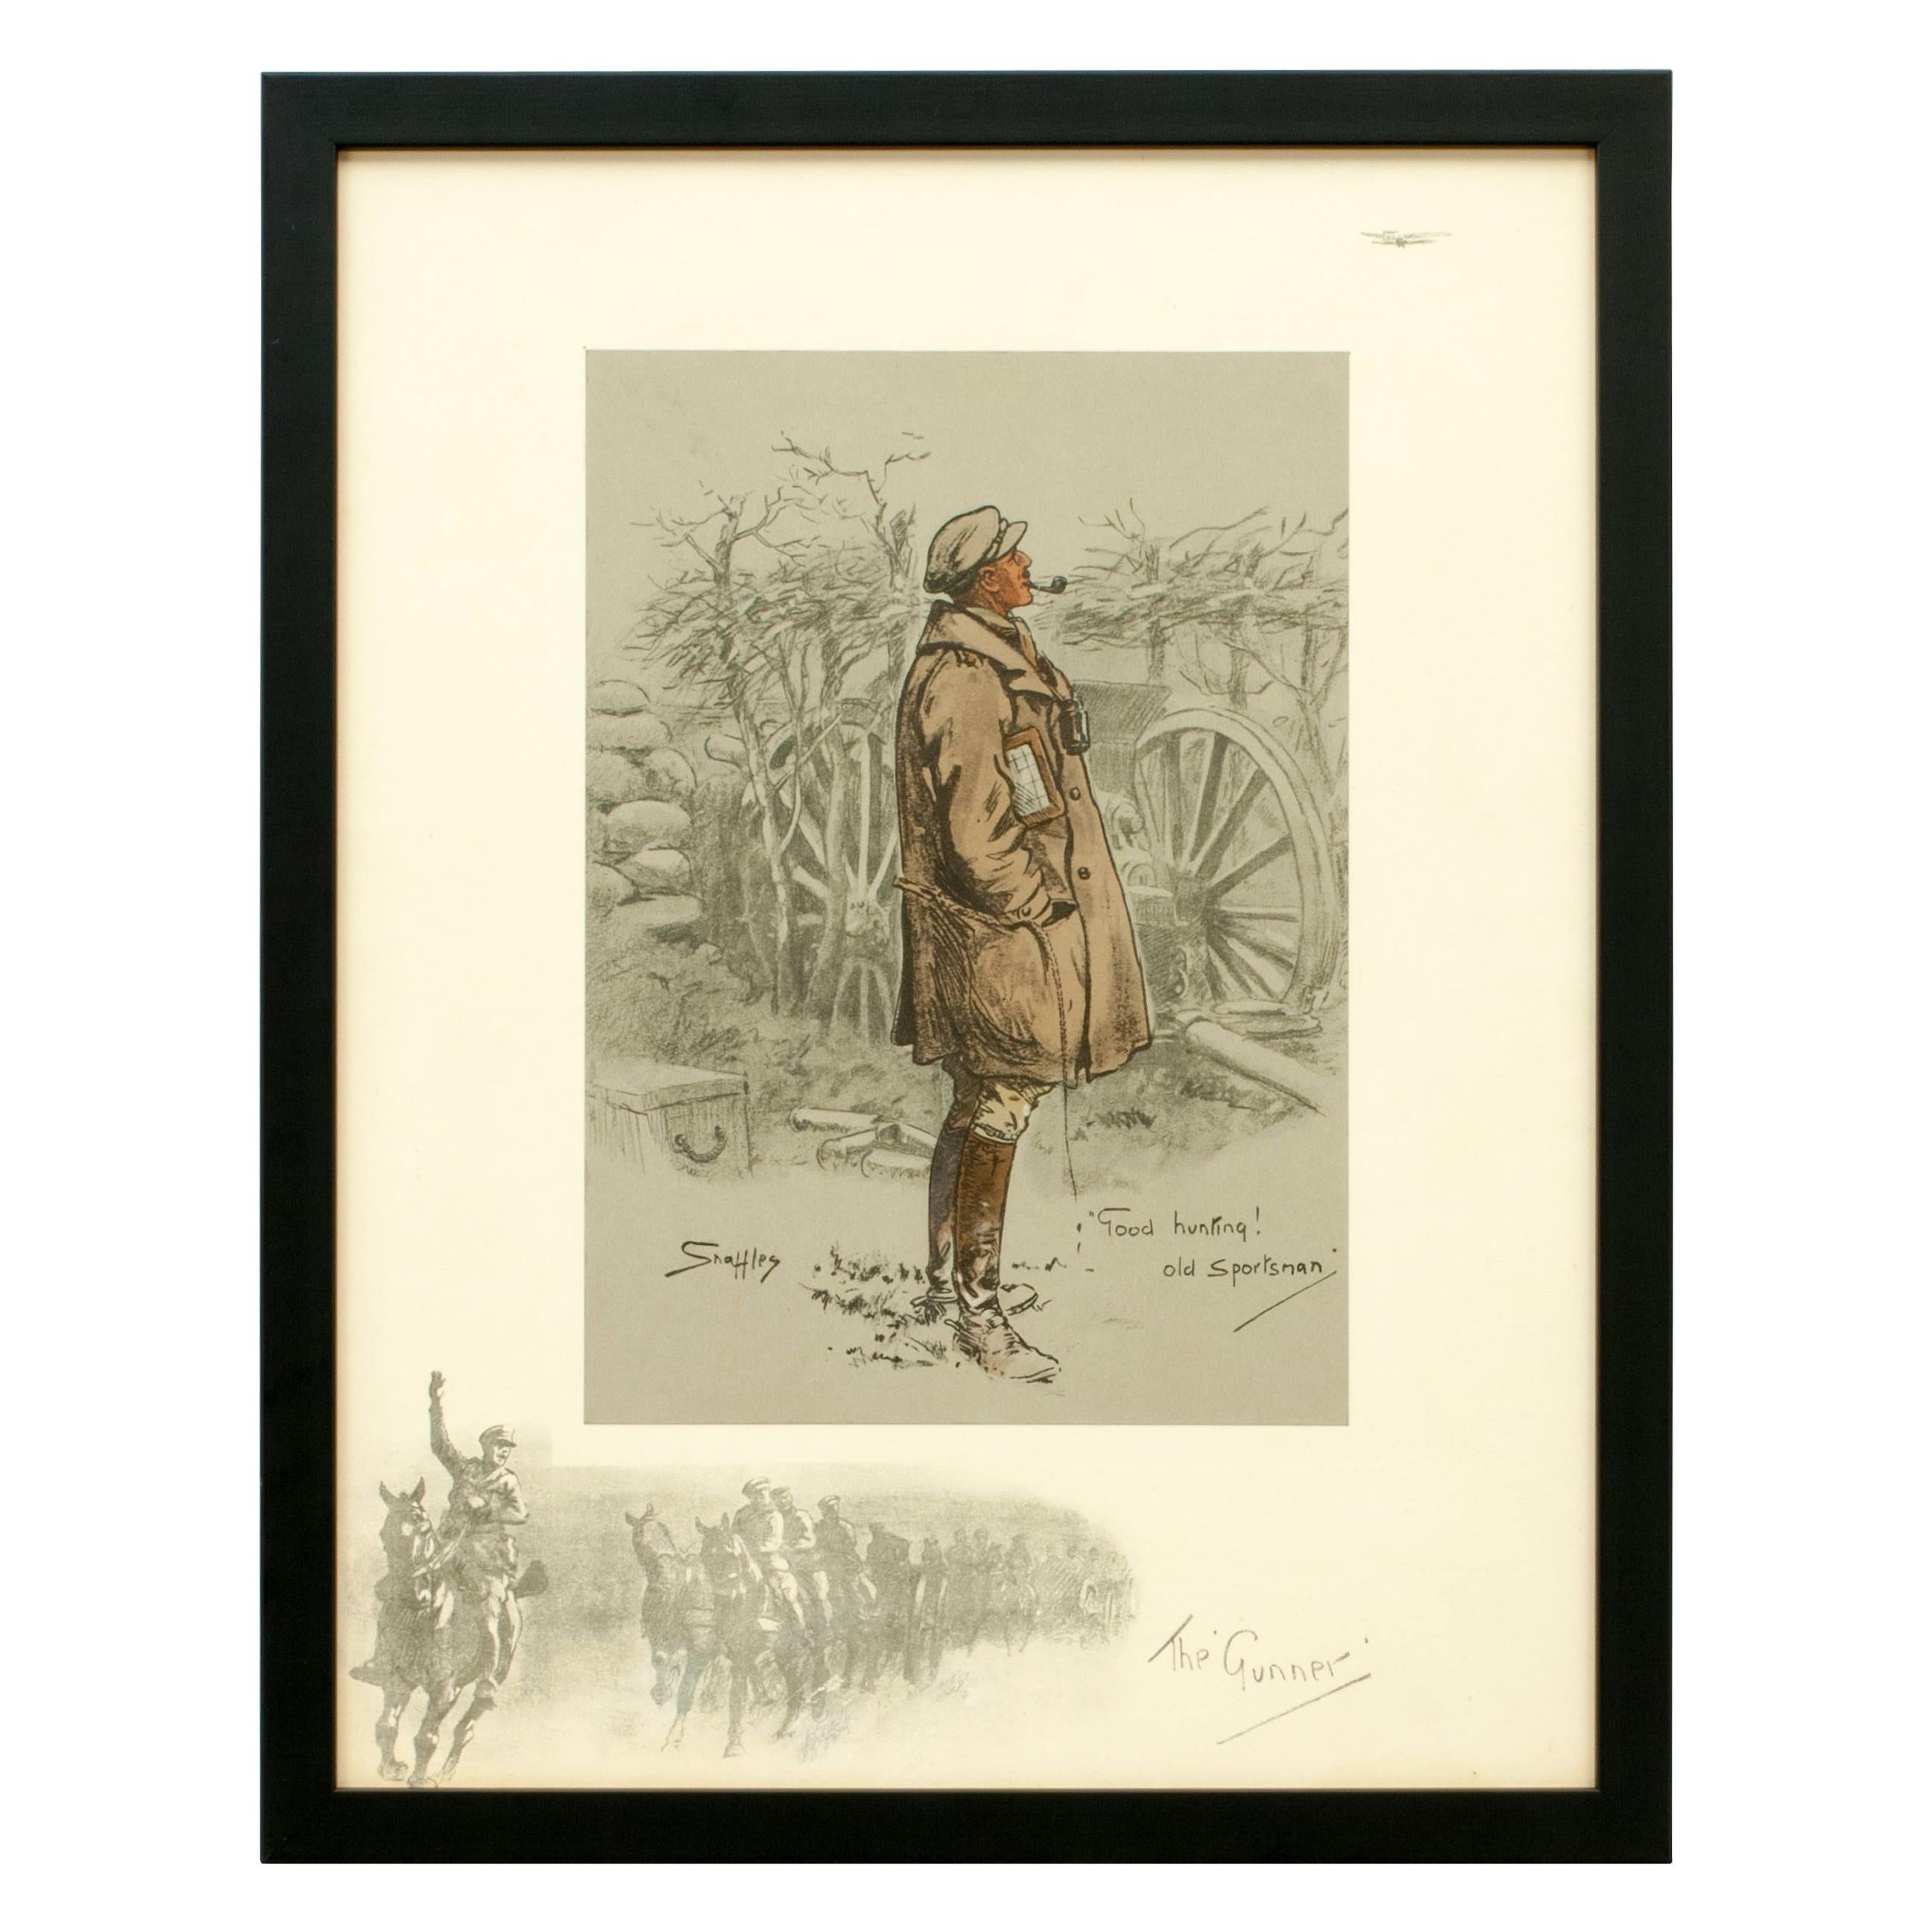 Snaffles WWI Military Print, The Gunner, Good Hunting Old Sportsman